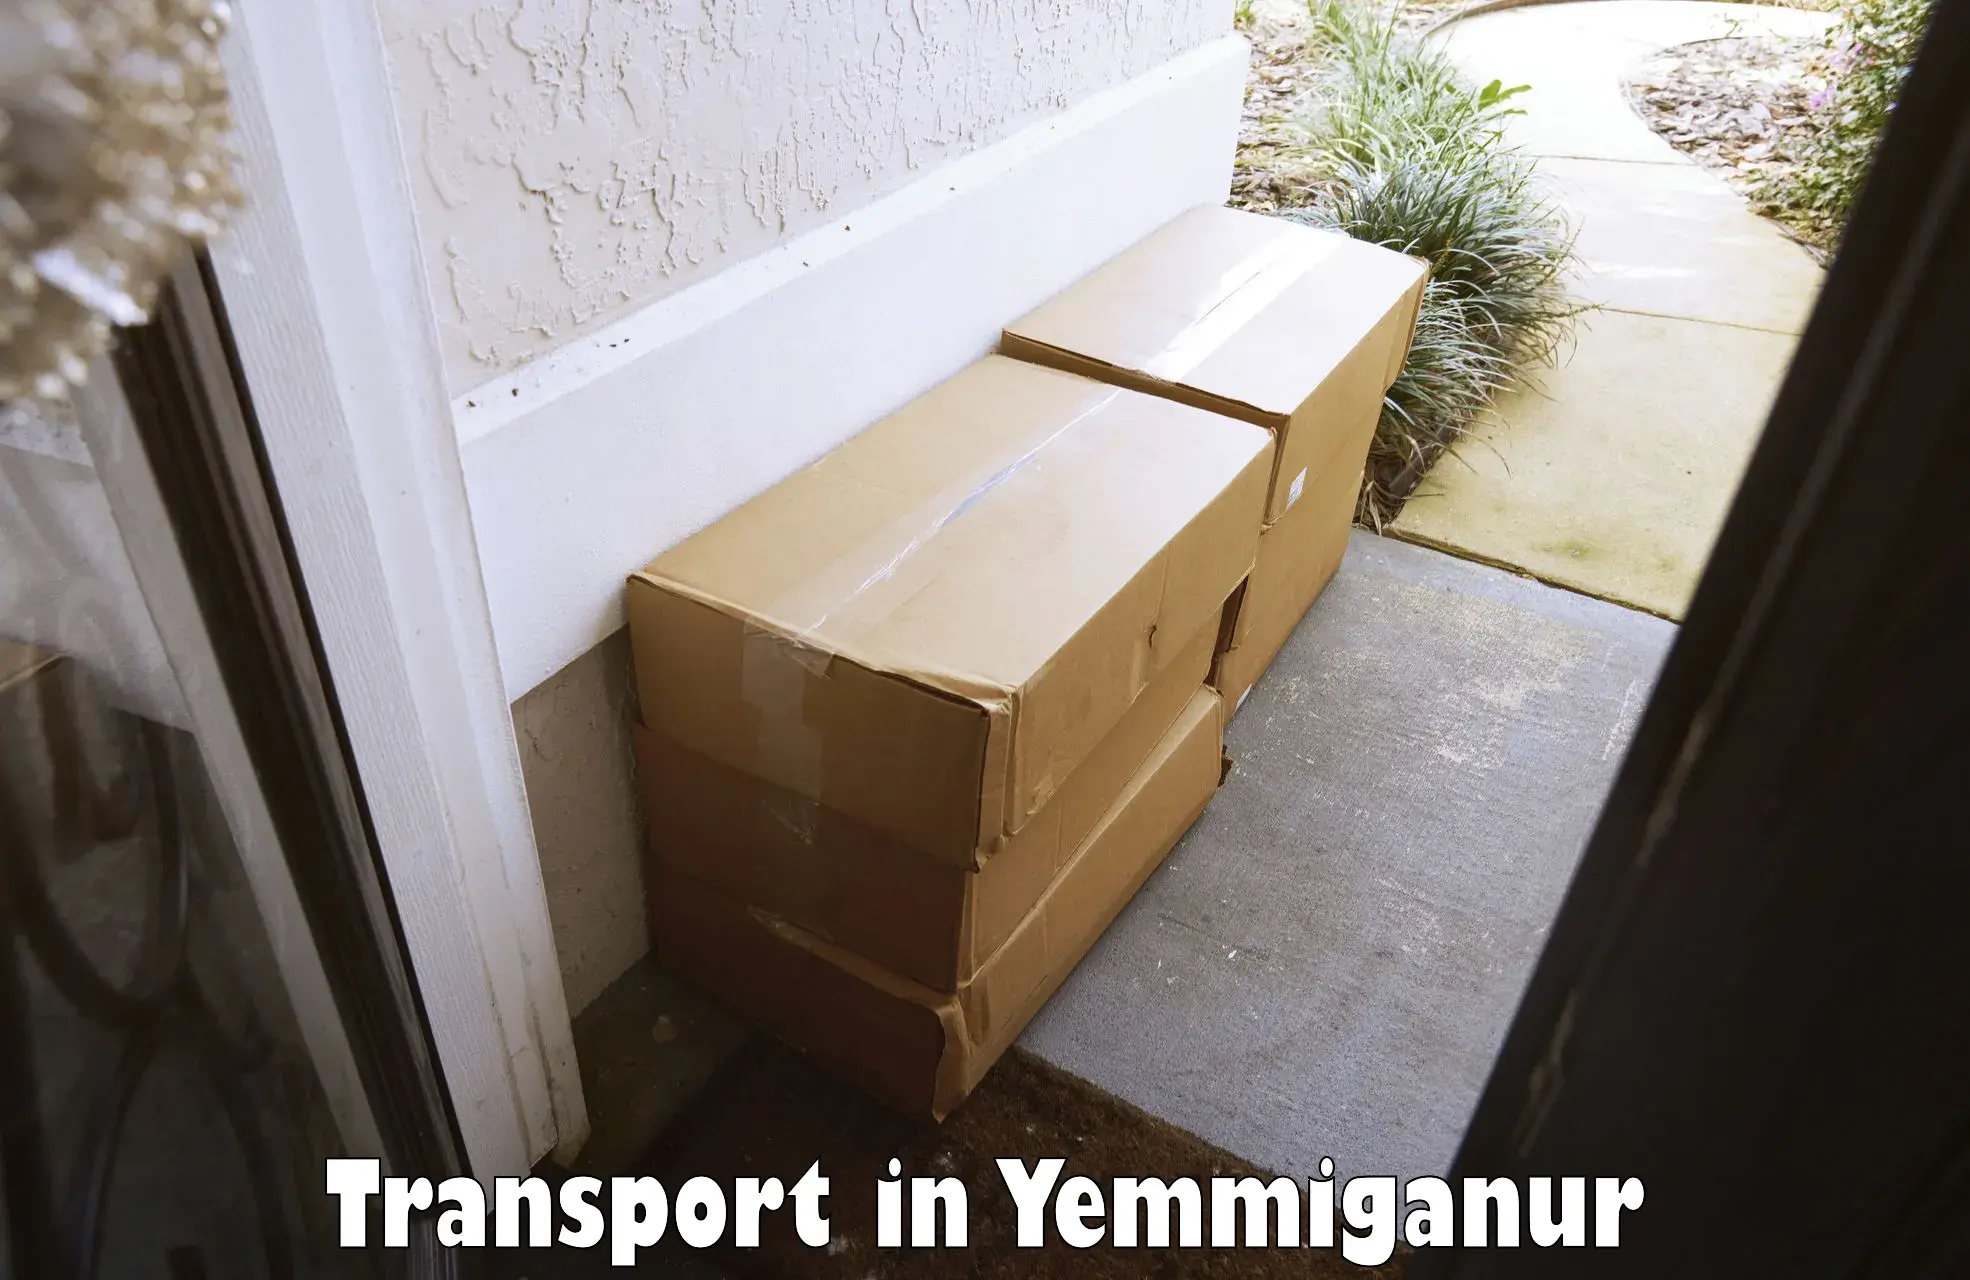 Lorry transport service in Yemmiganur